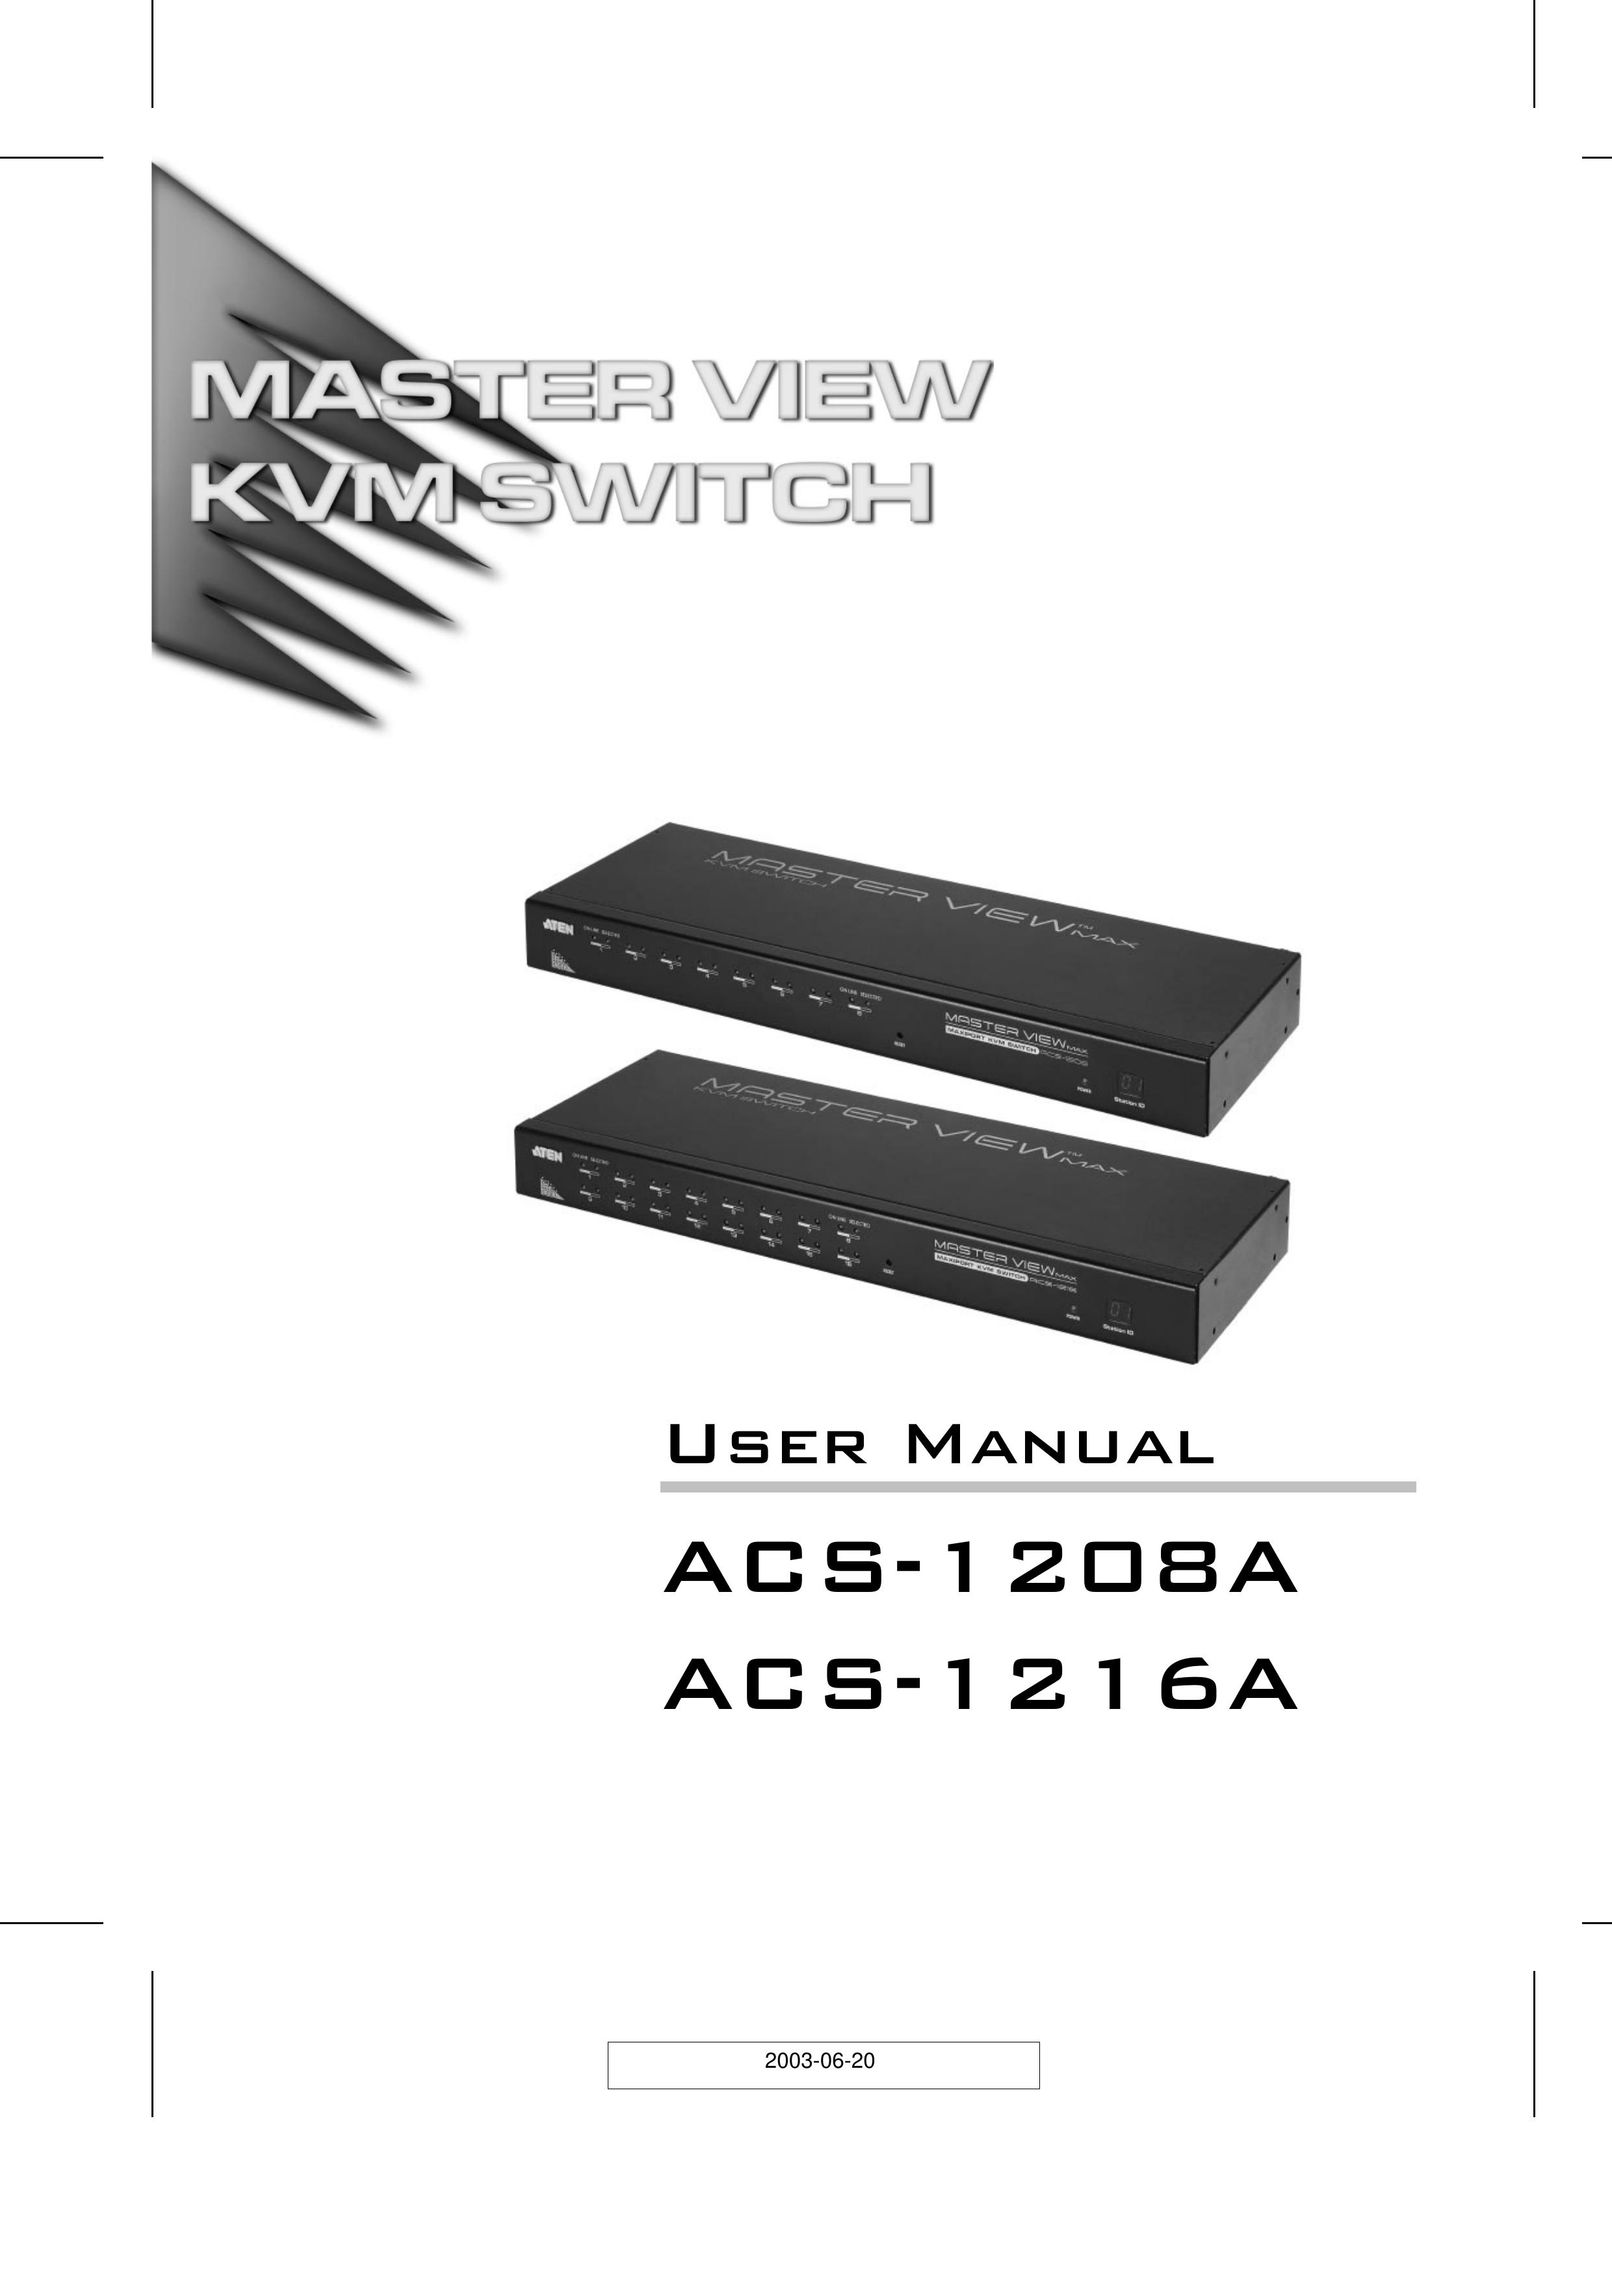 ATEN Technology ACS-1208A Switch User Manual